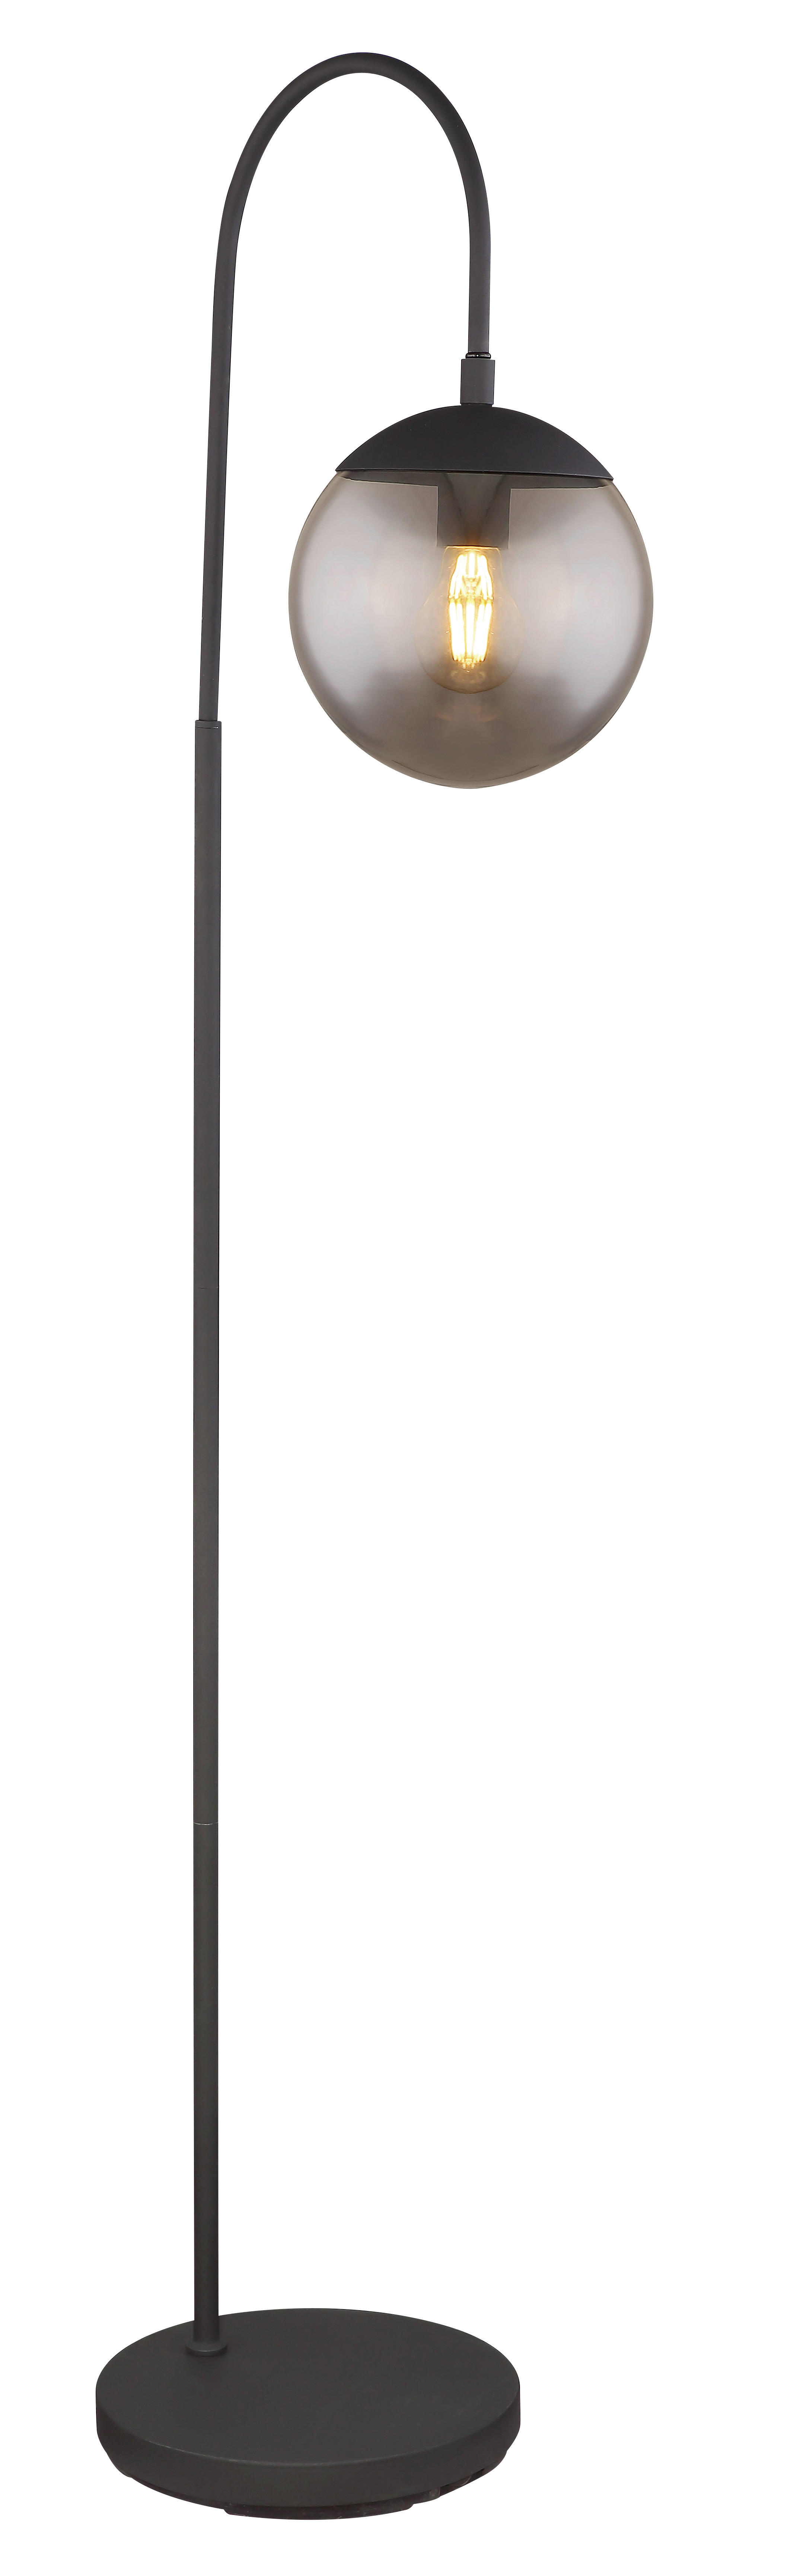 BÖJD LAMPA 39/25/150 cm    - svart, Design, metall/glas (39/25/150cm)